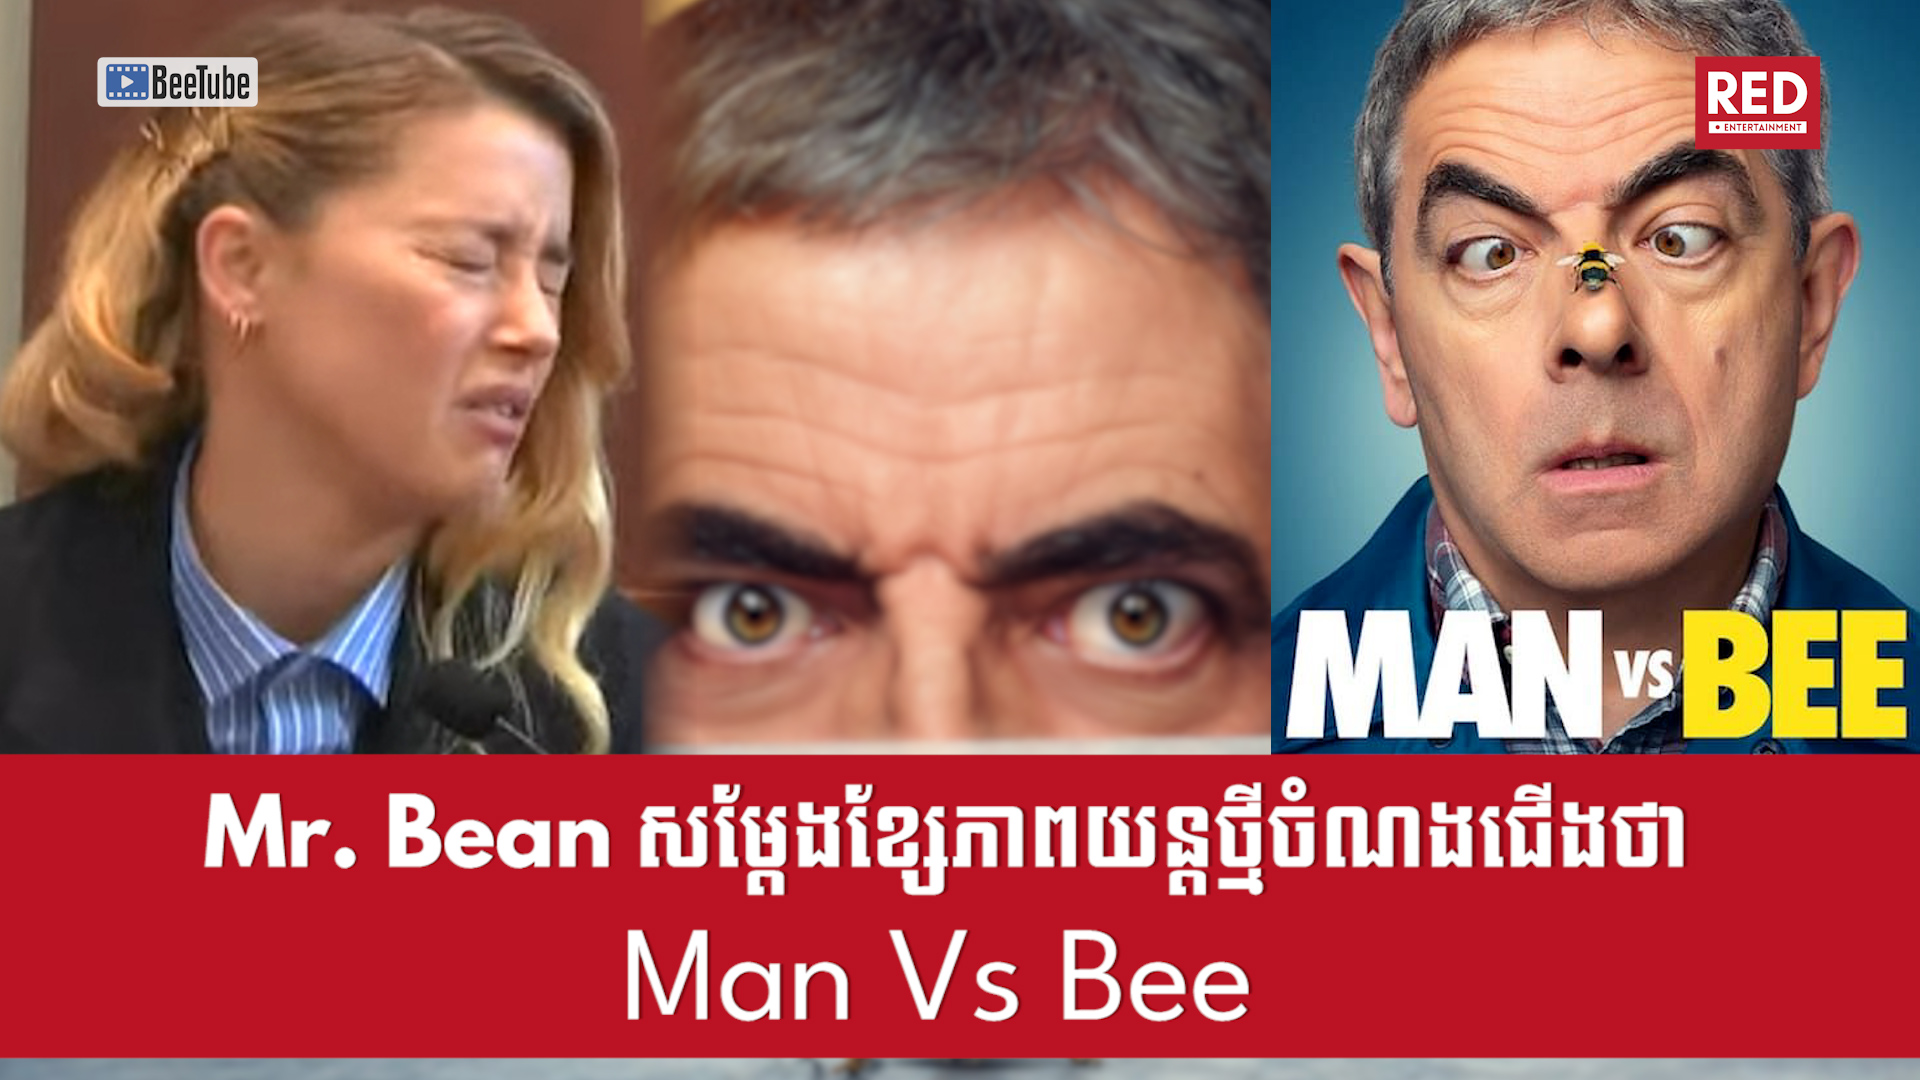 Mr. Bean សម្តែងក្នុងខ្សែភាពយន្តថ្មី Man Vs Bee​ ក្រោយពីមាន Meme My Dog Stepped on a Bee ពី Amber Heard 